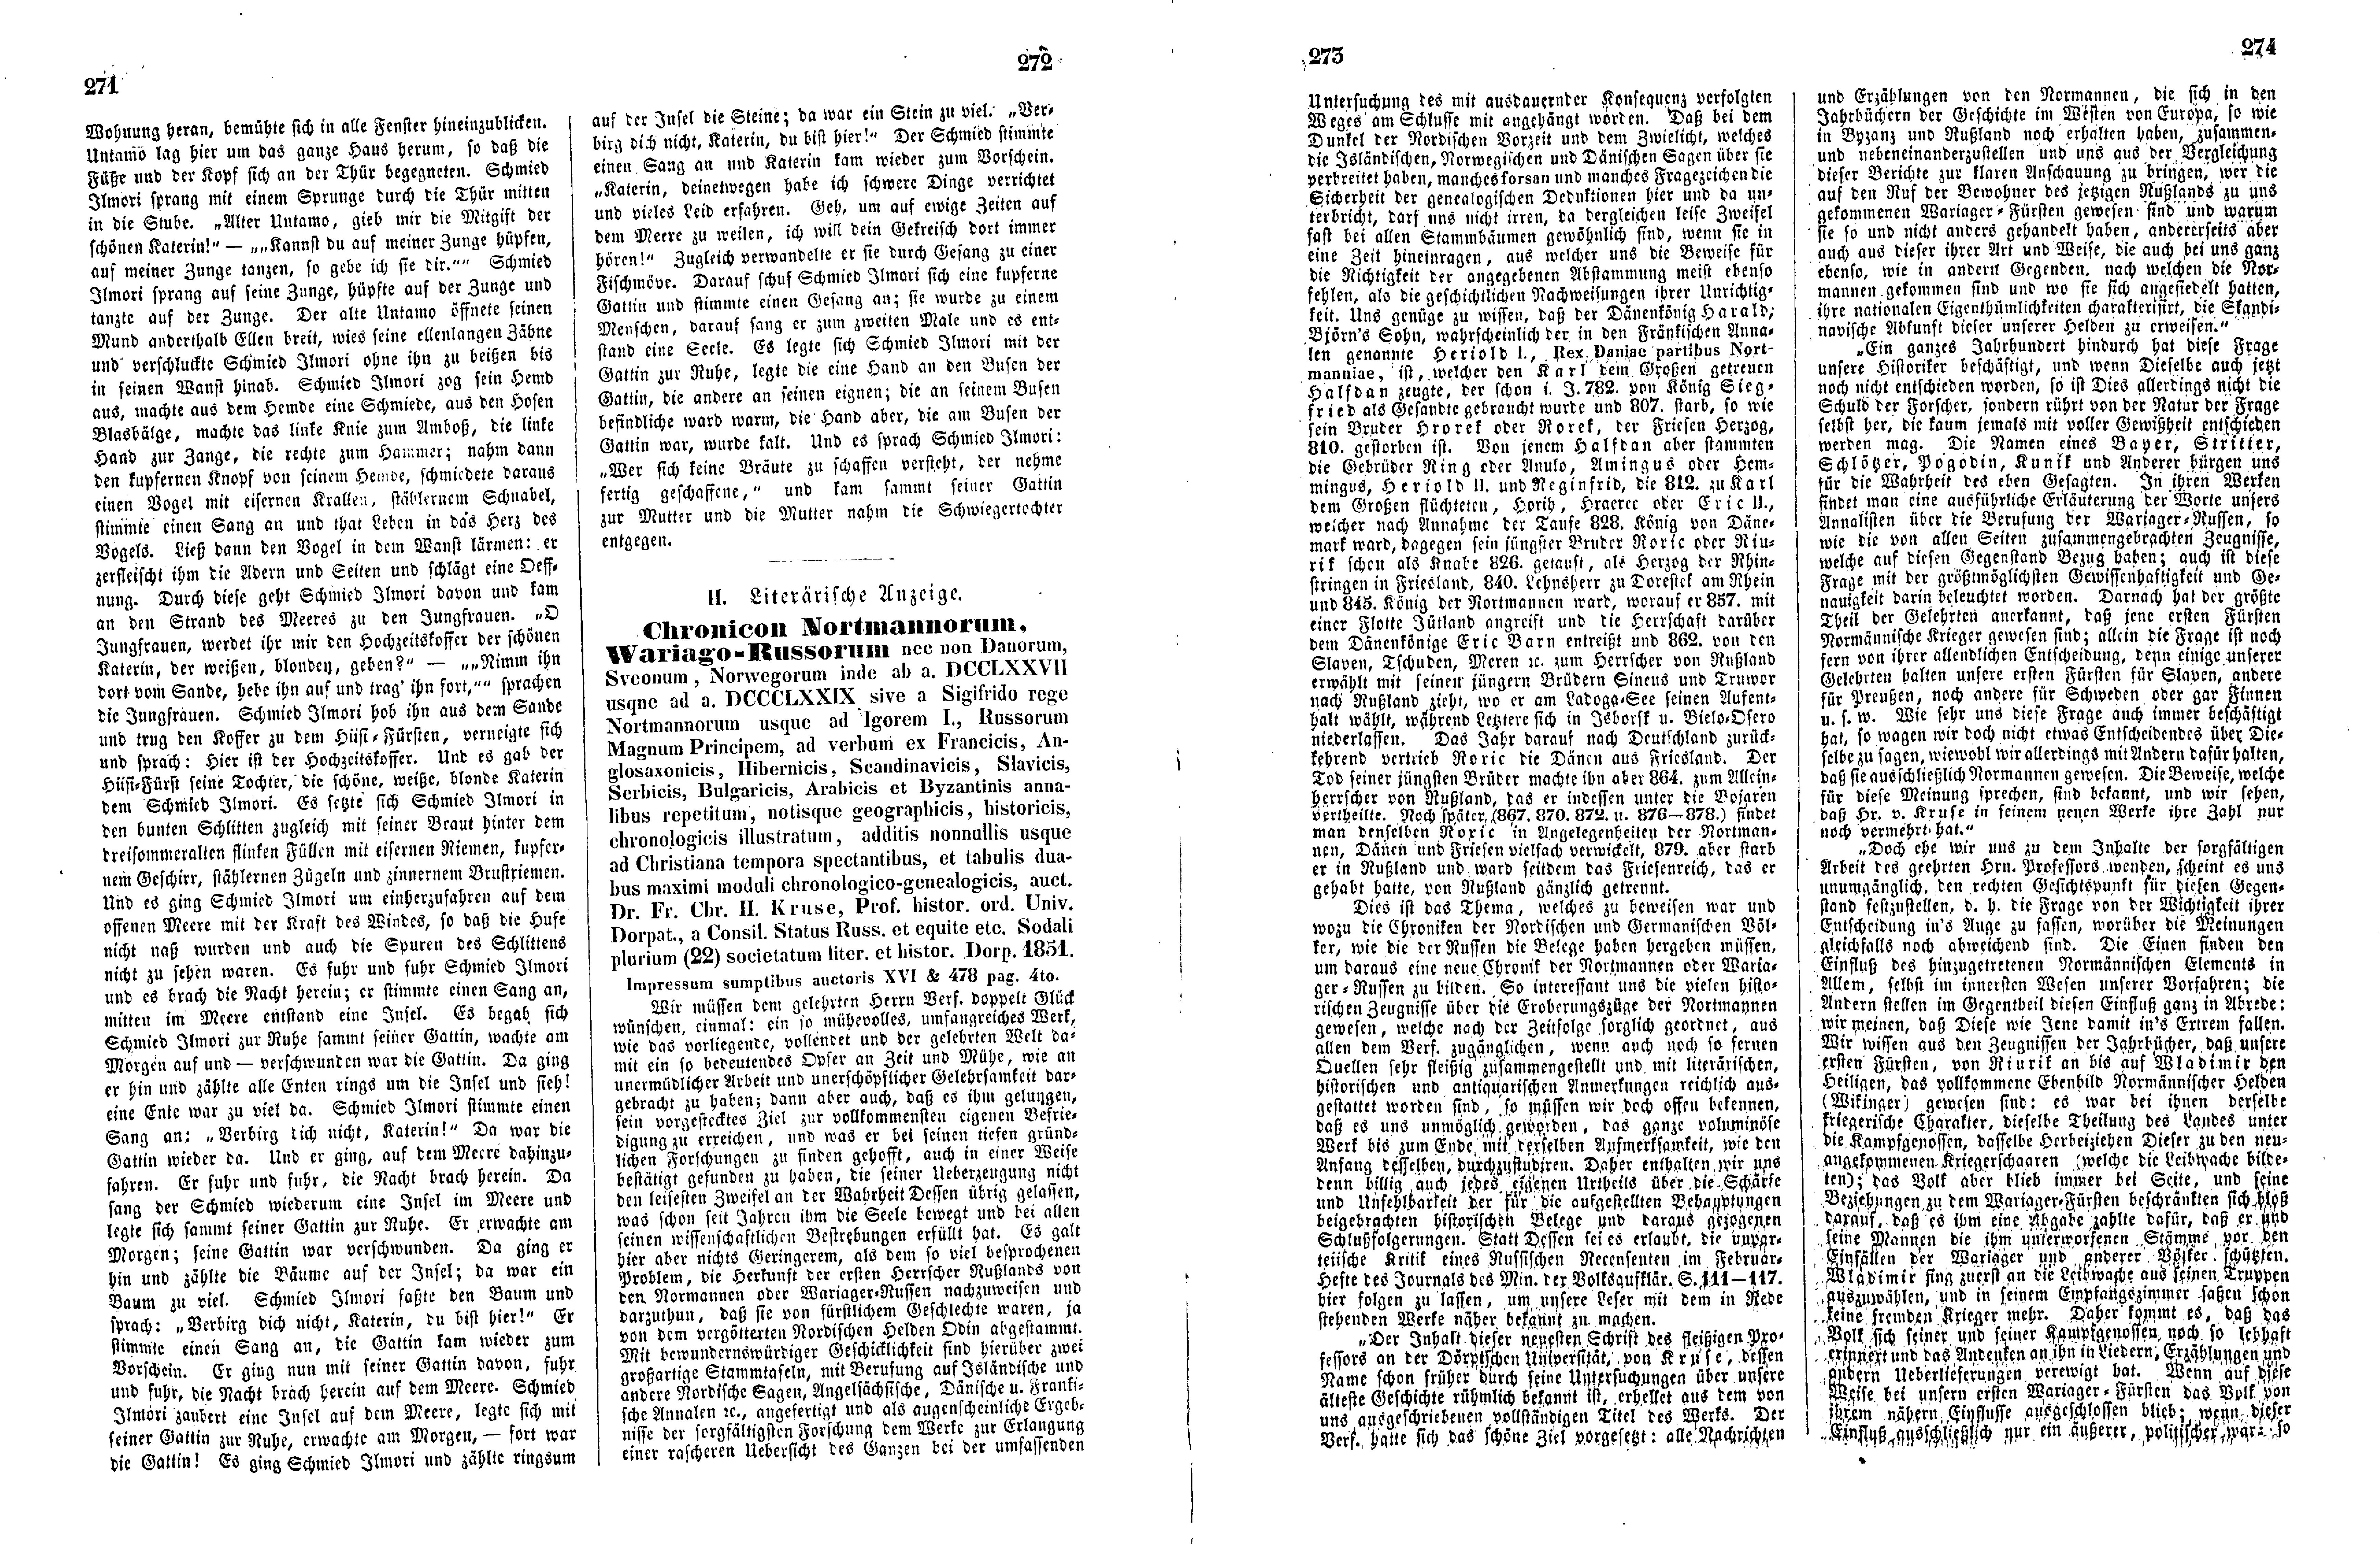 Das Inland [17] (1852) | 72. (271-274) Main body of text